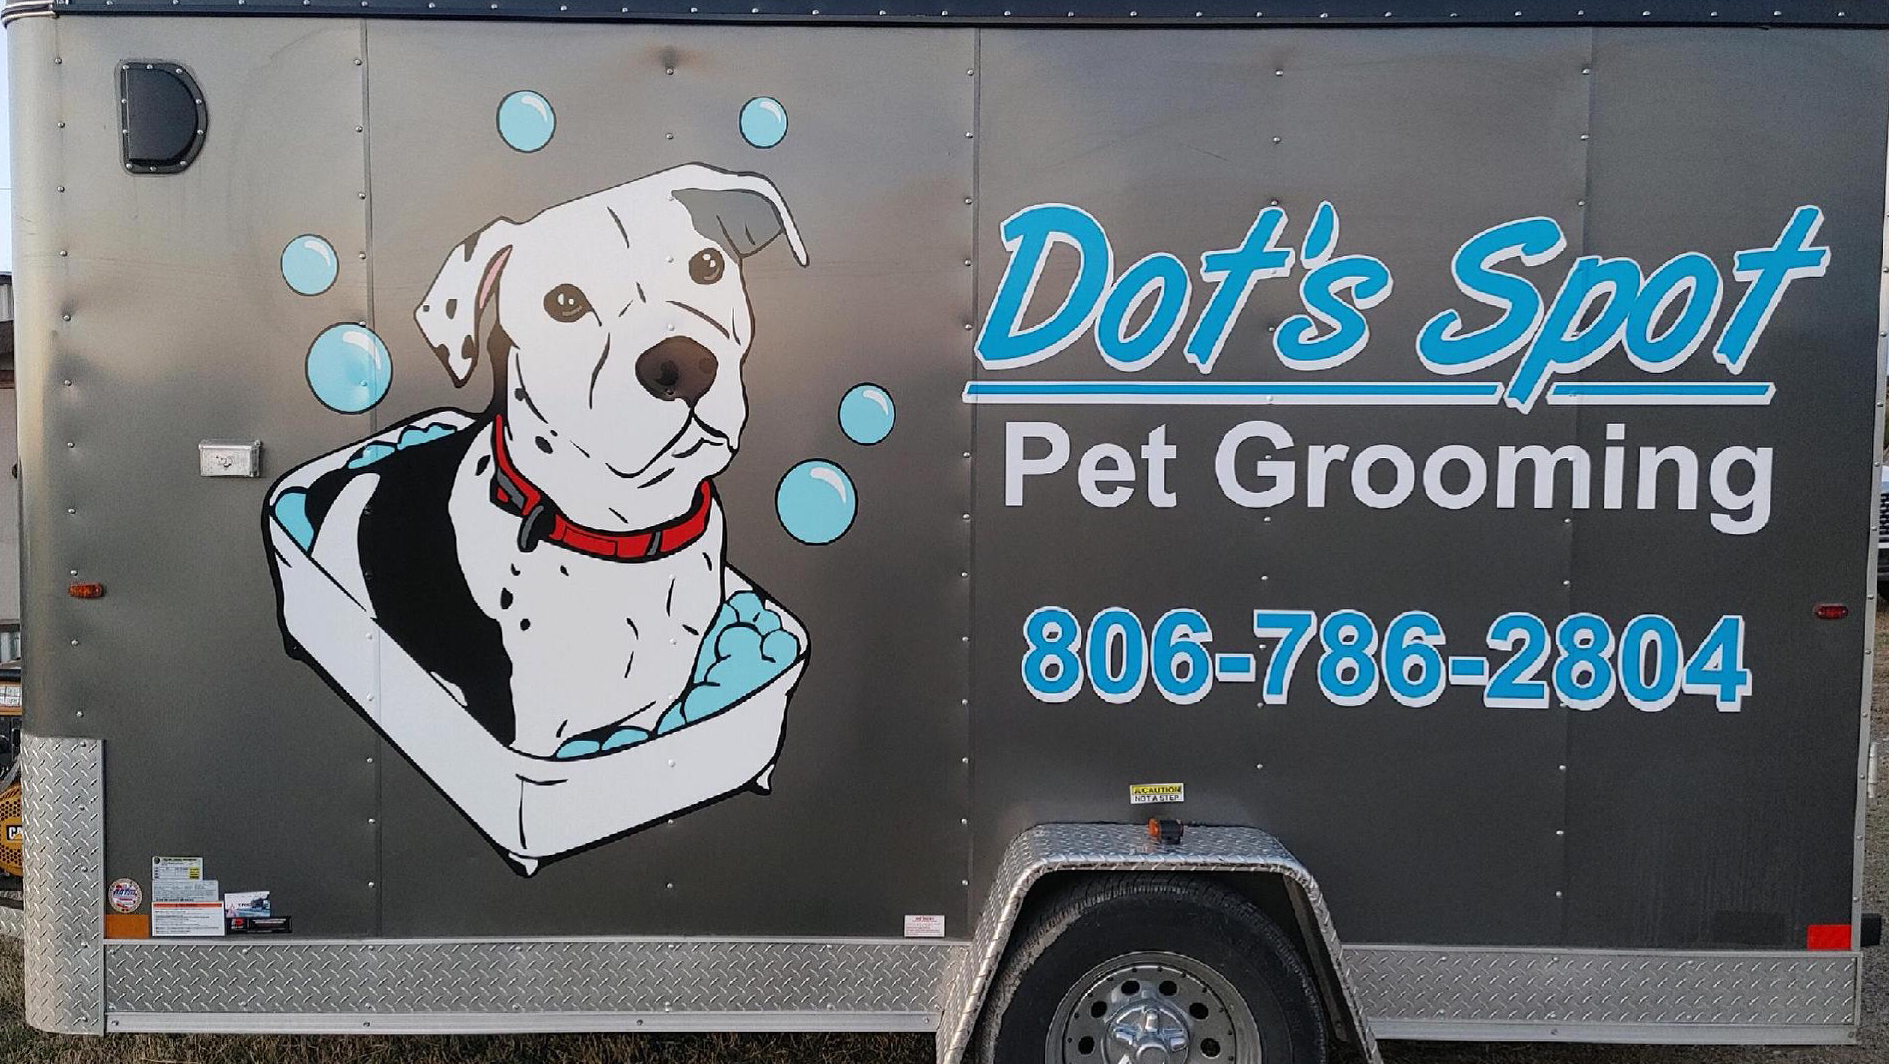 Dot's Spot Pet Grooming